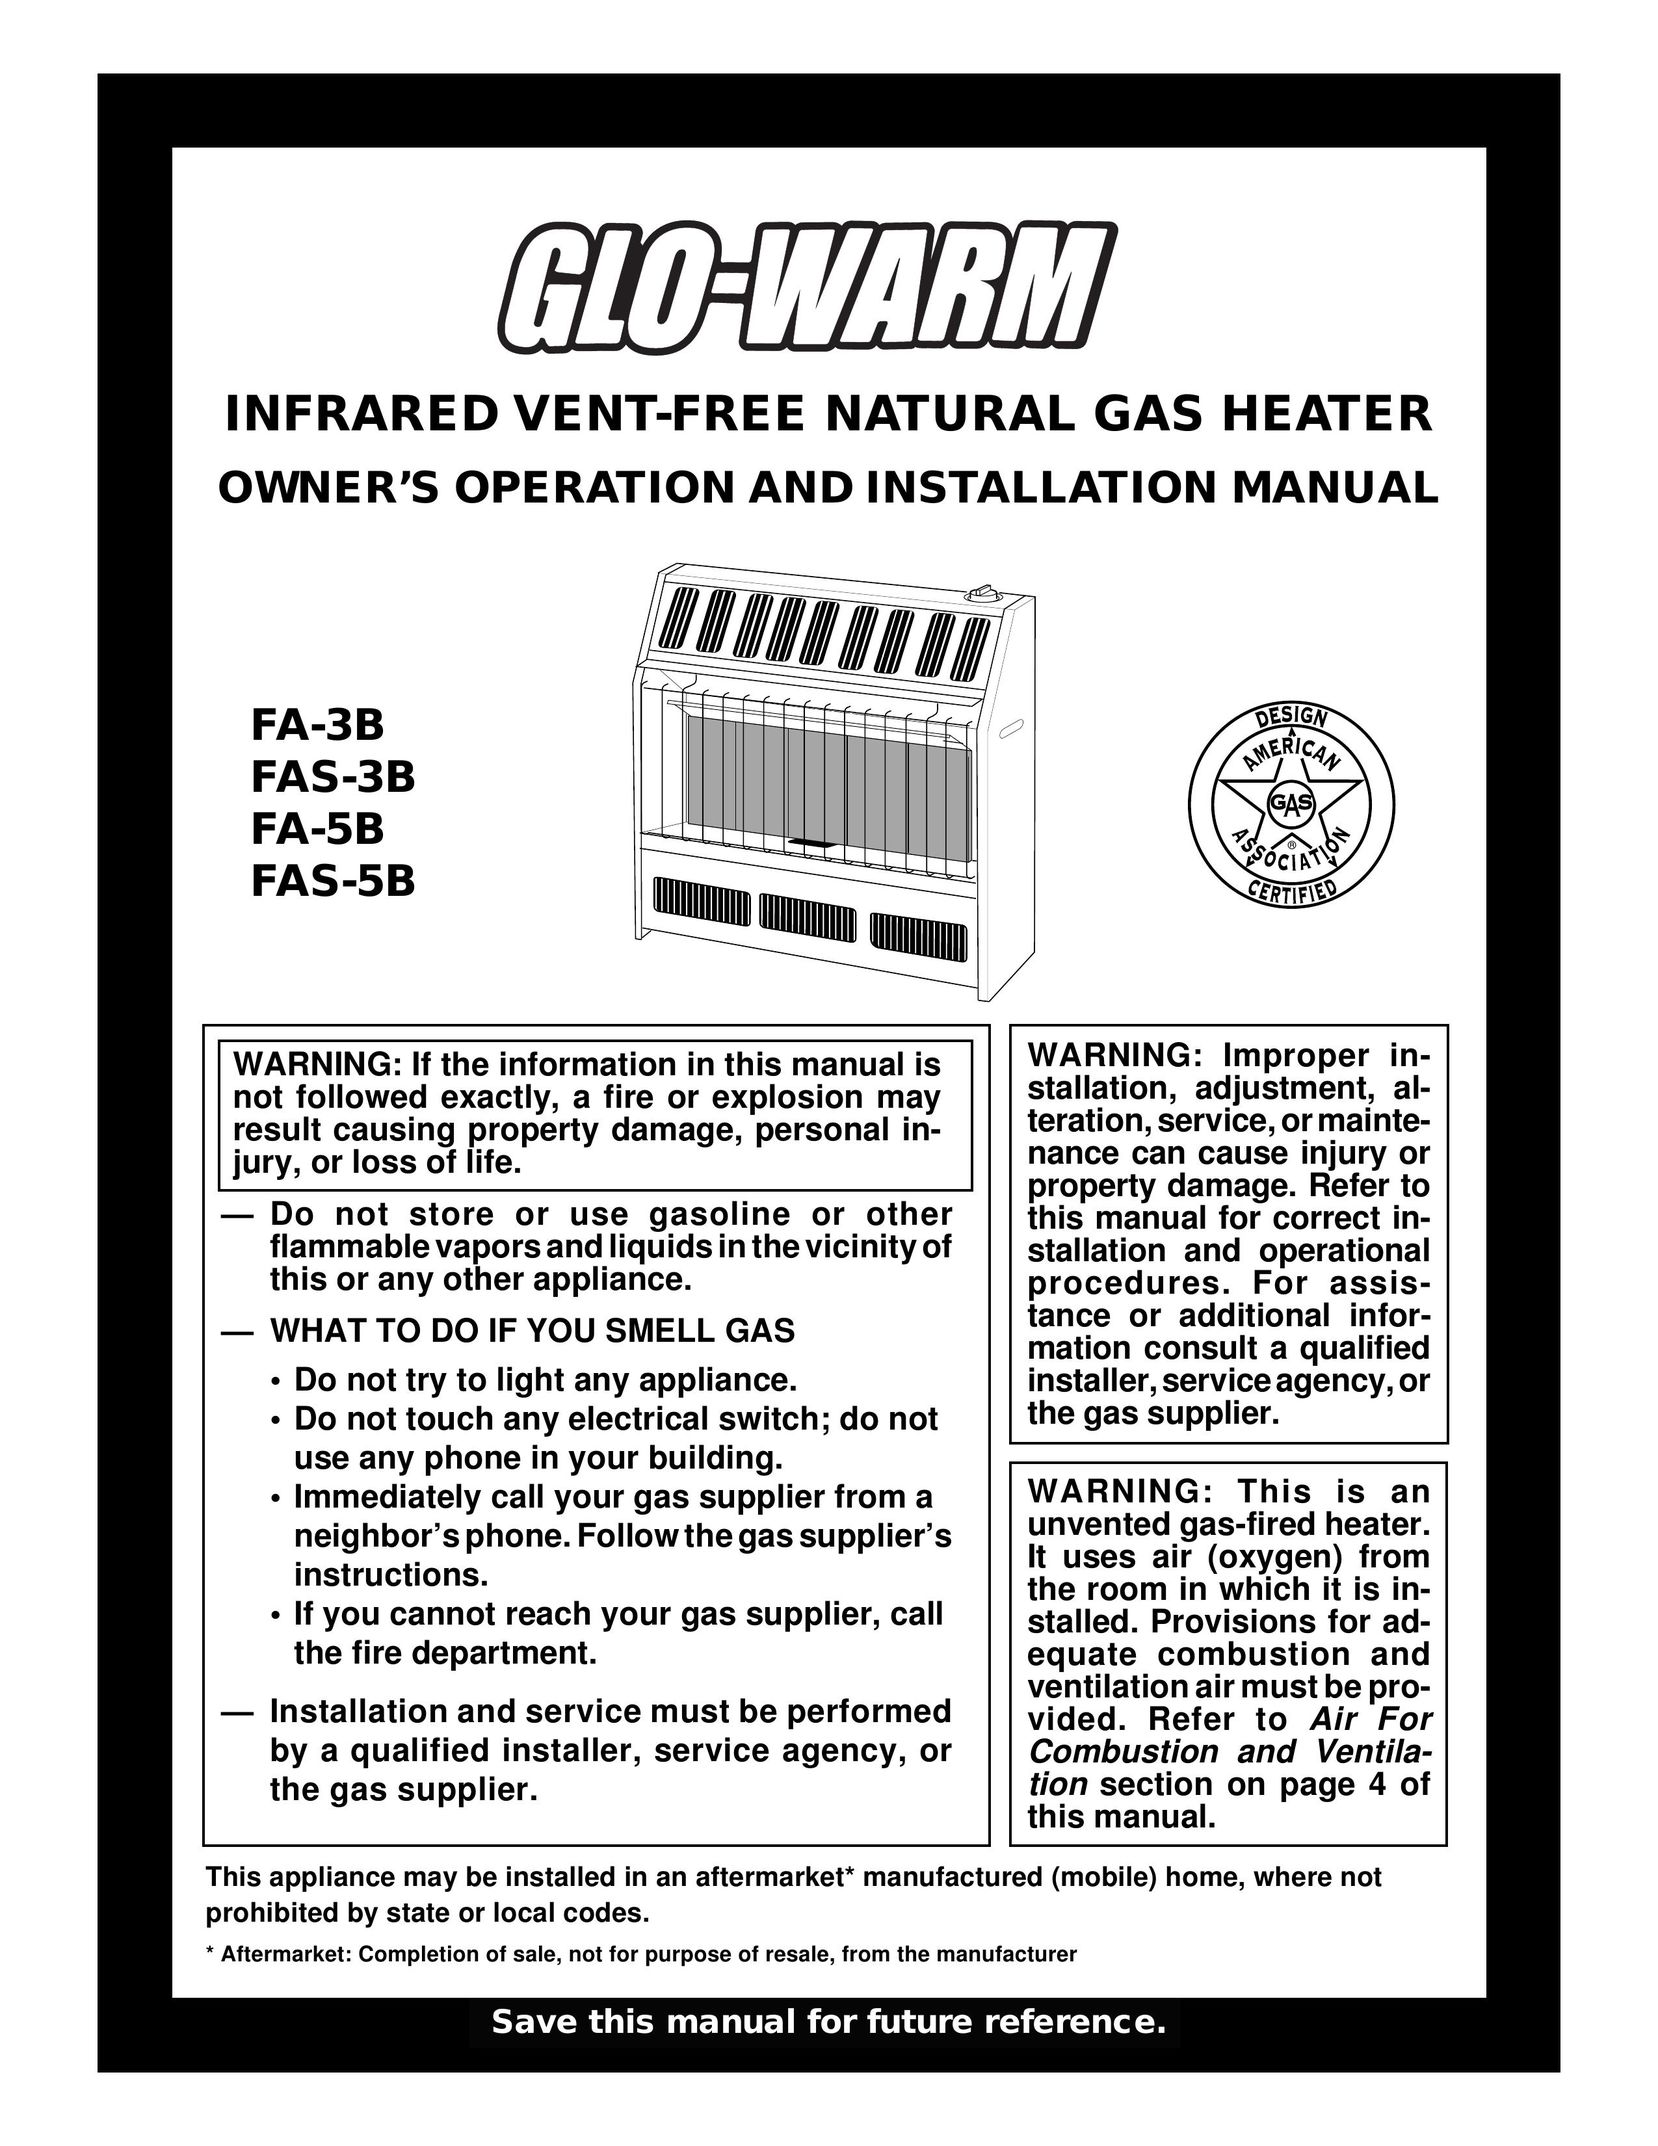 Desa FAS-5B Gas Heater User Manual